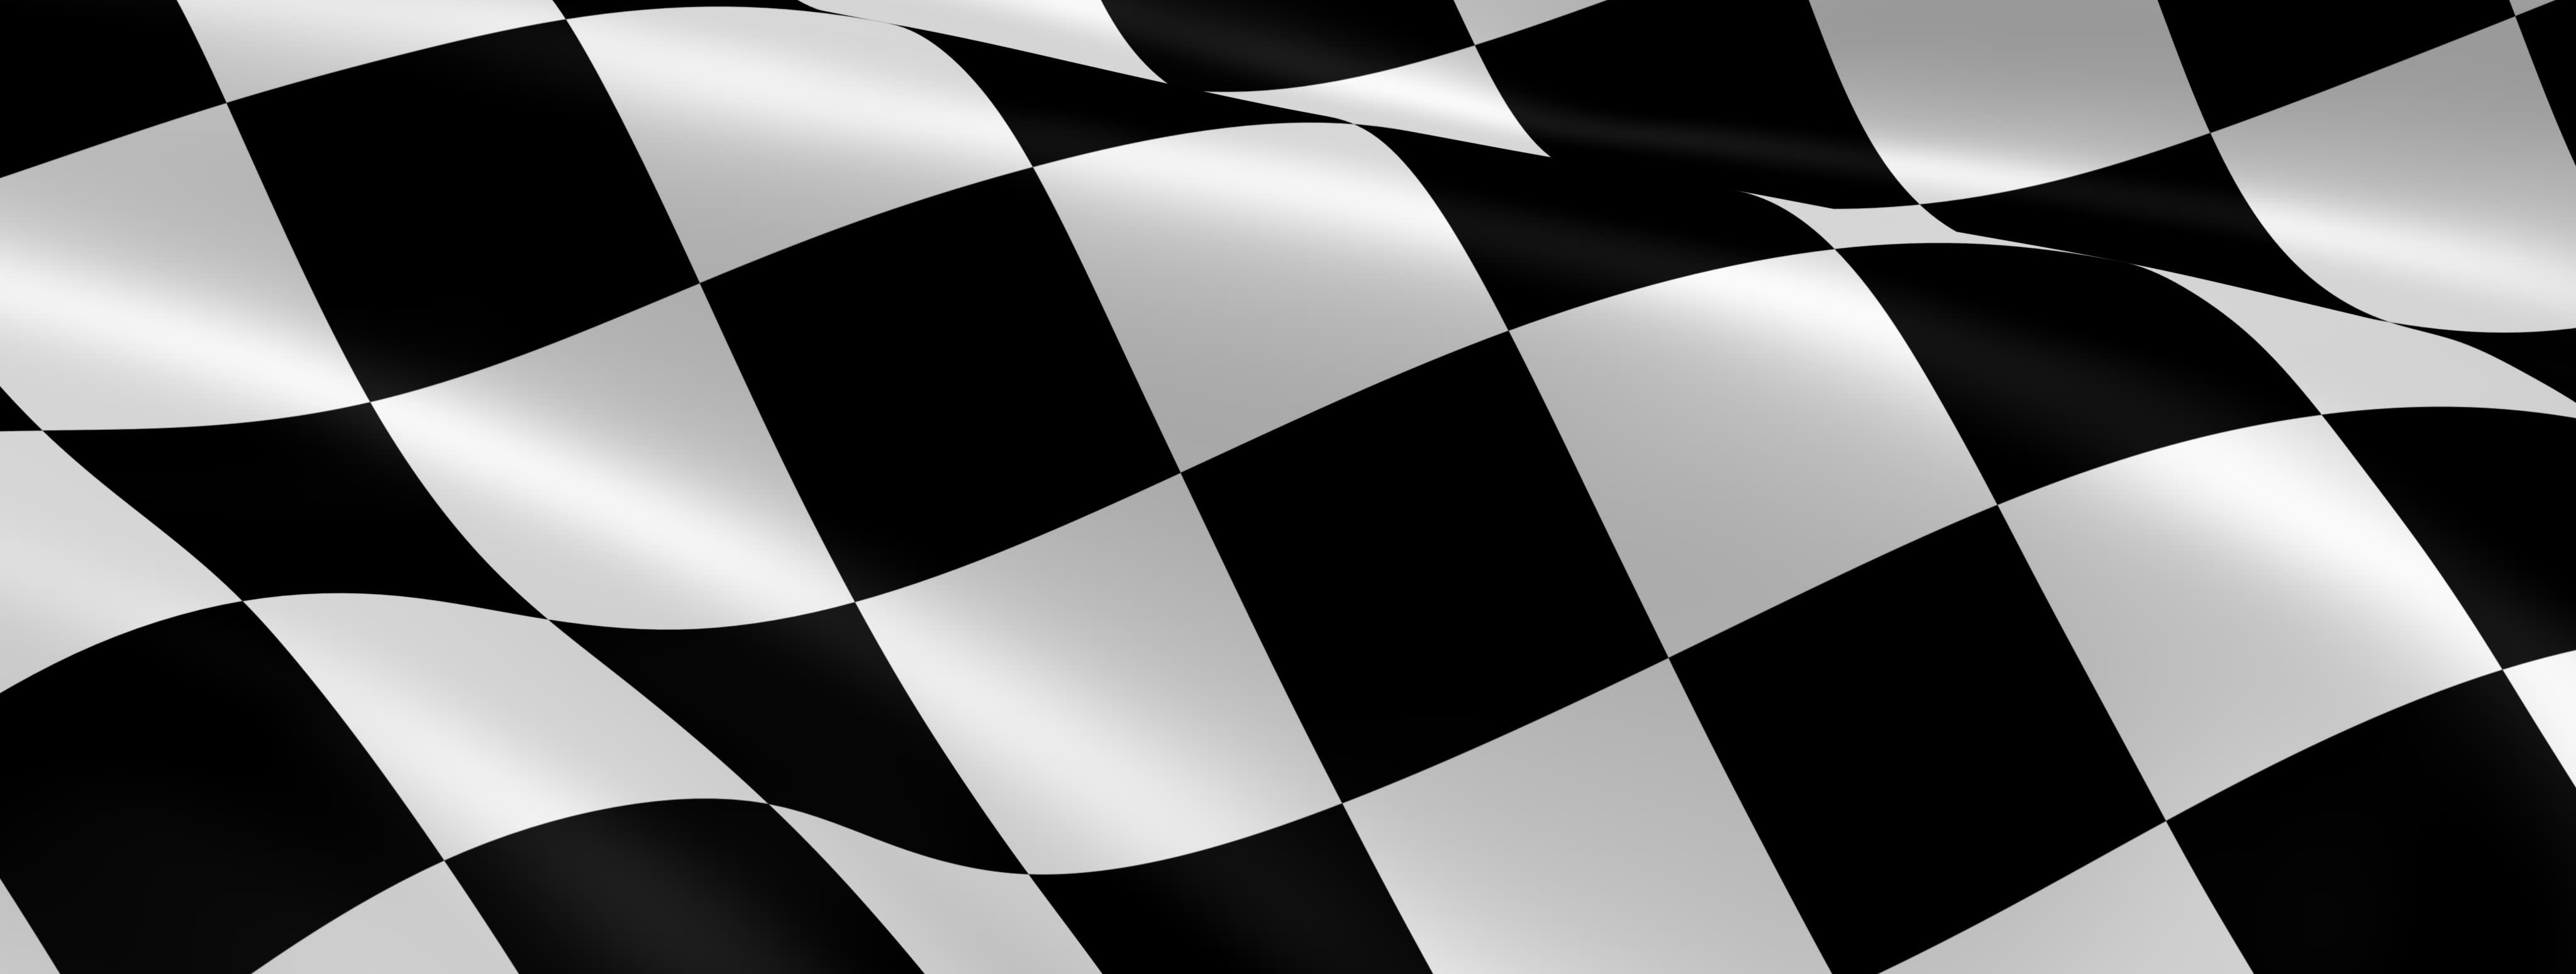 download blue flag with orange stripe racing